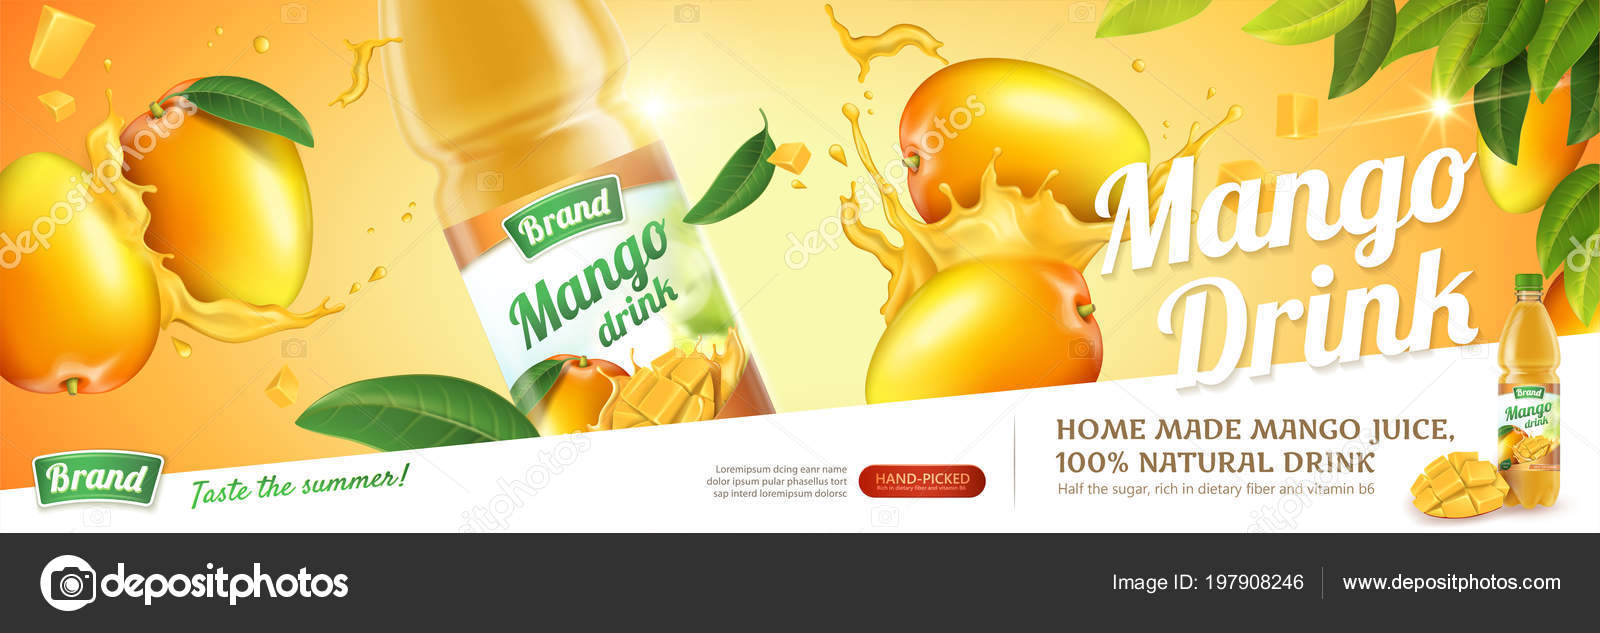 Mango juice Vector Art Stock Images | Depositphotos